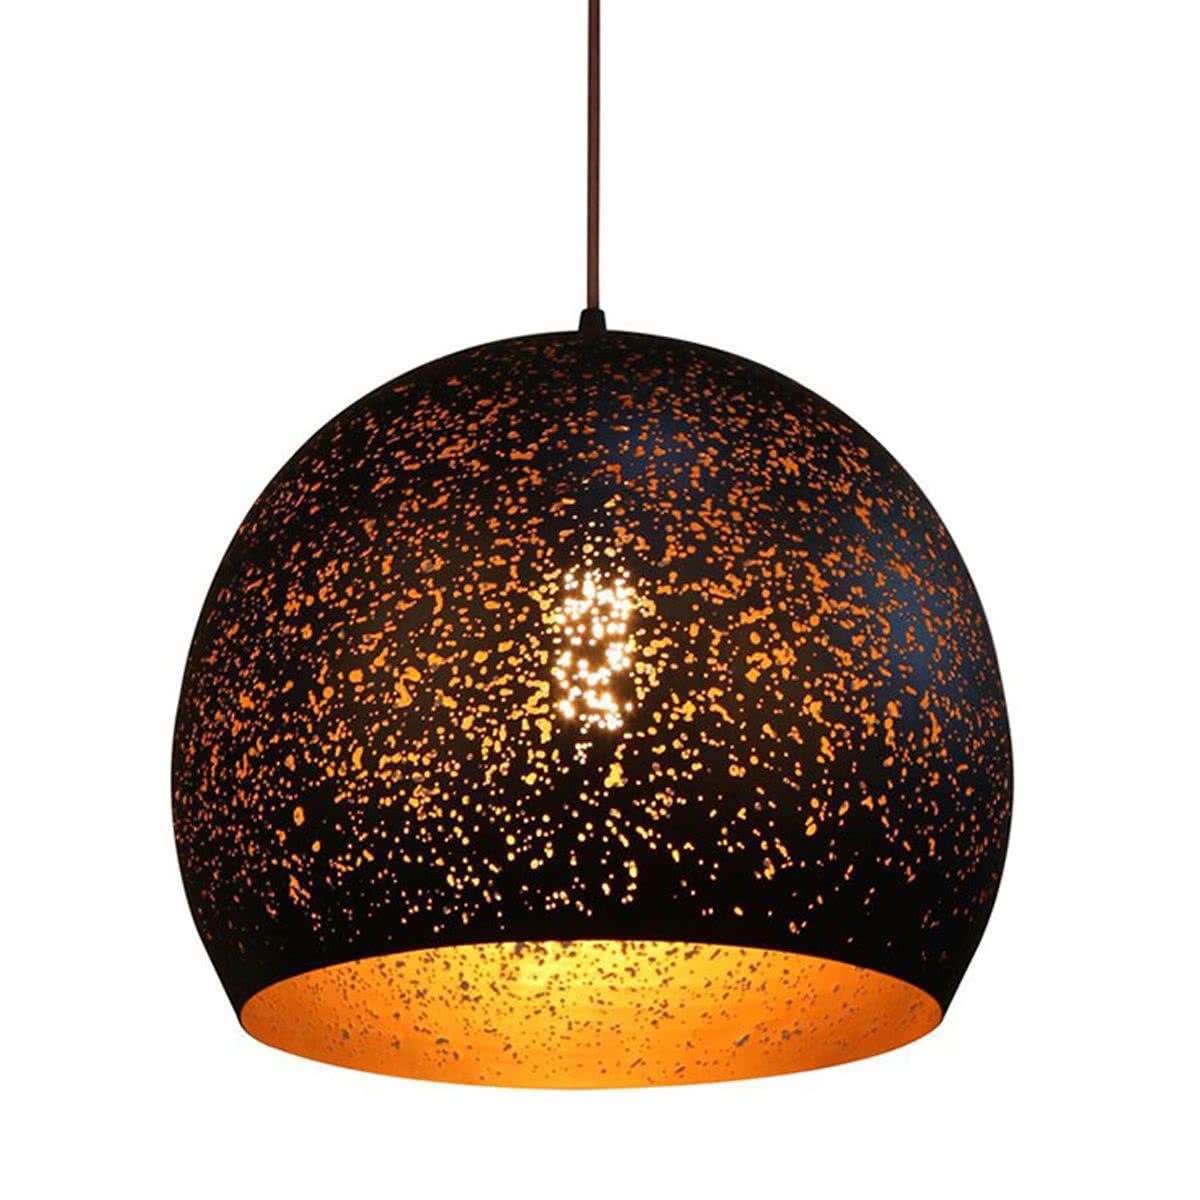 Celeste Black Aluminium Dome Pendant Light With Gold Interior